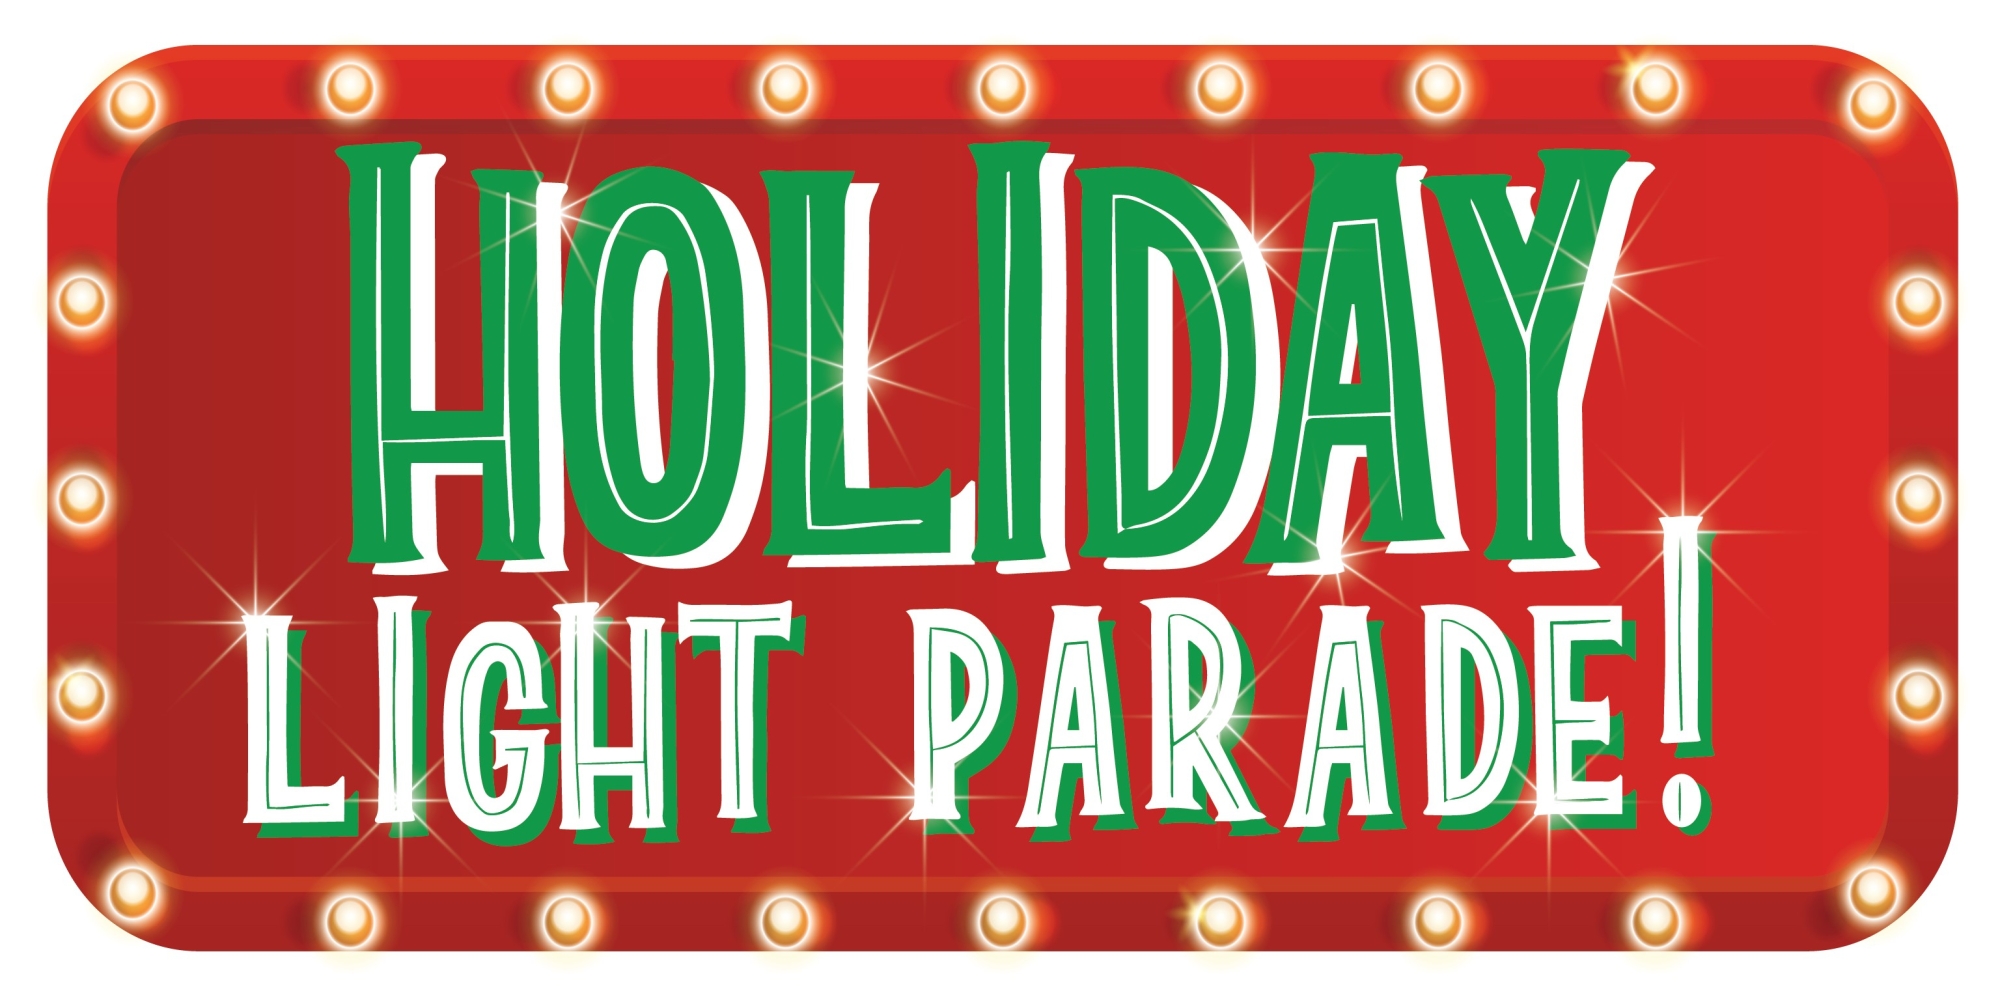 Holiday Light Parade City of Ontario, California